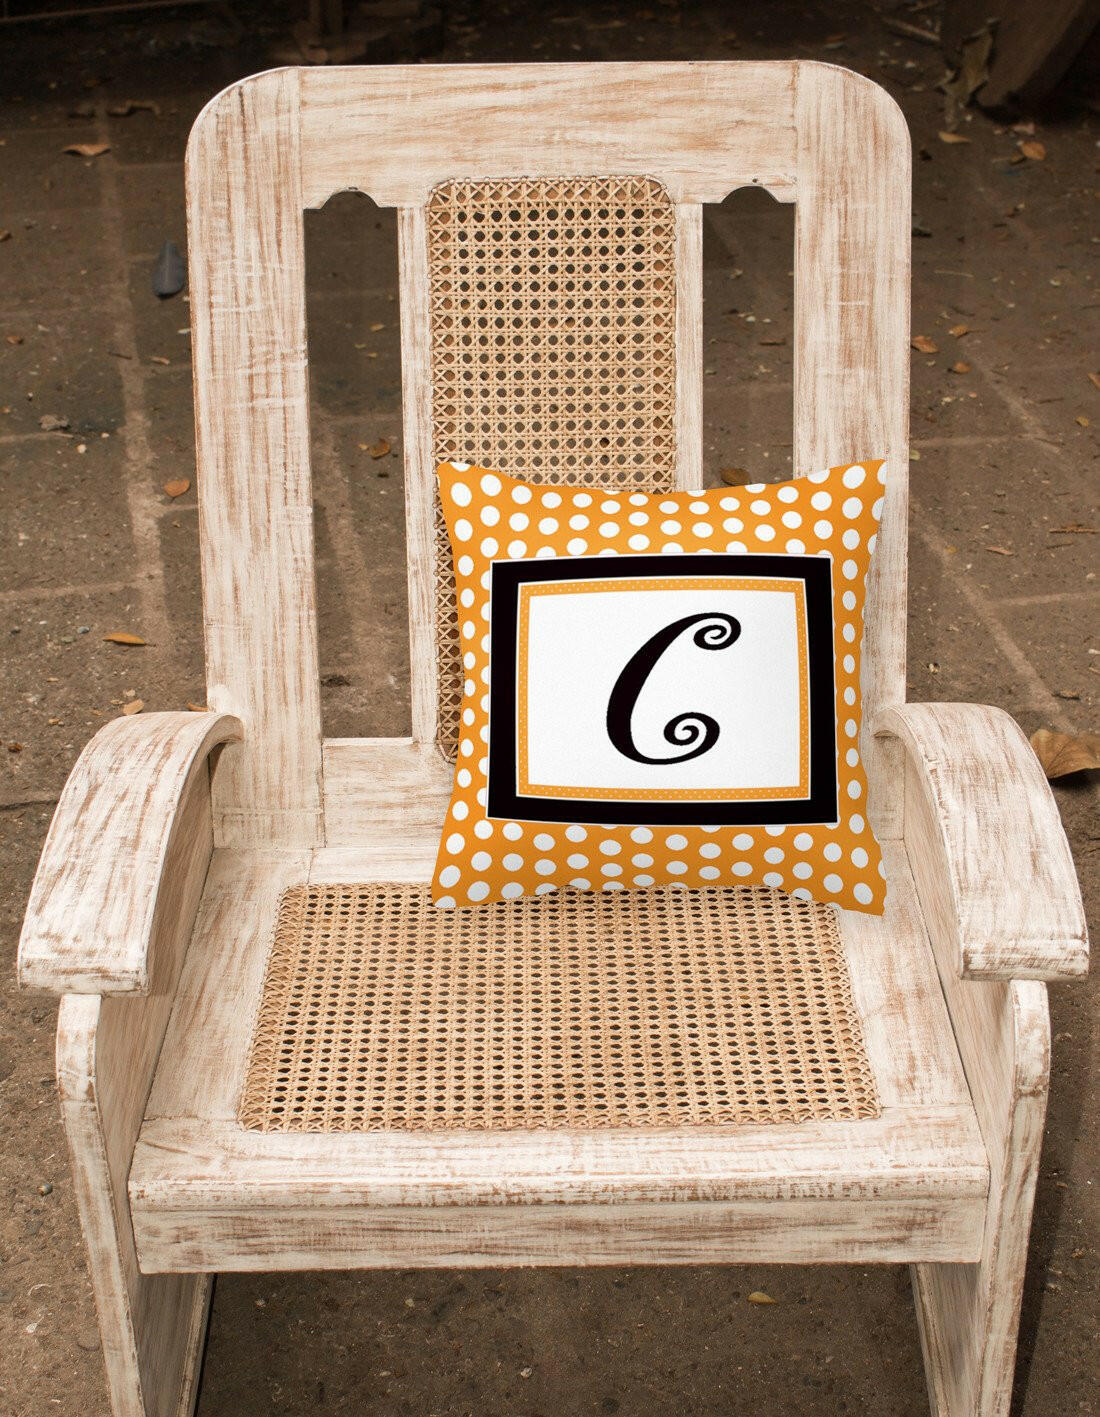 Monogram Initial C Orange Polkadots Decorative   Canvas Fabric Pillow CJ1033 - the-store.com